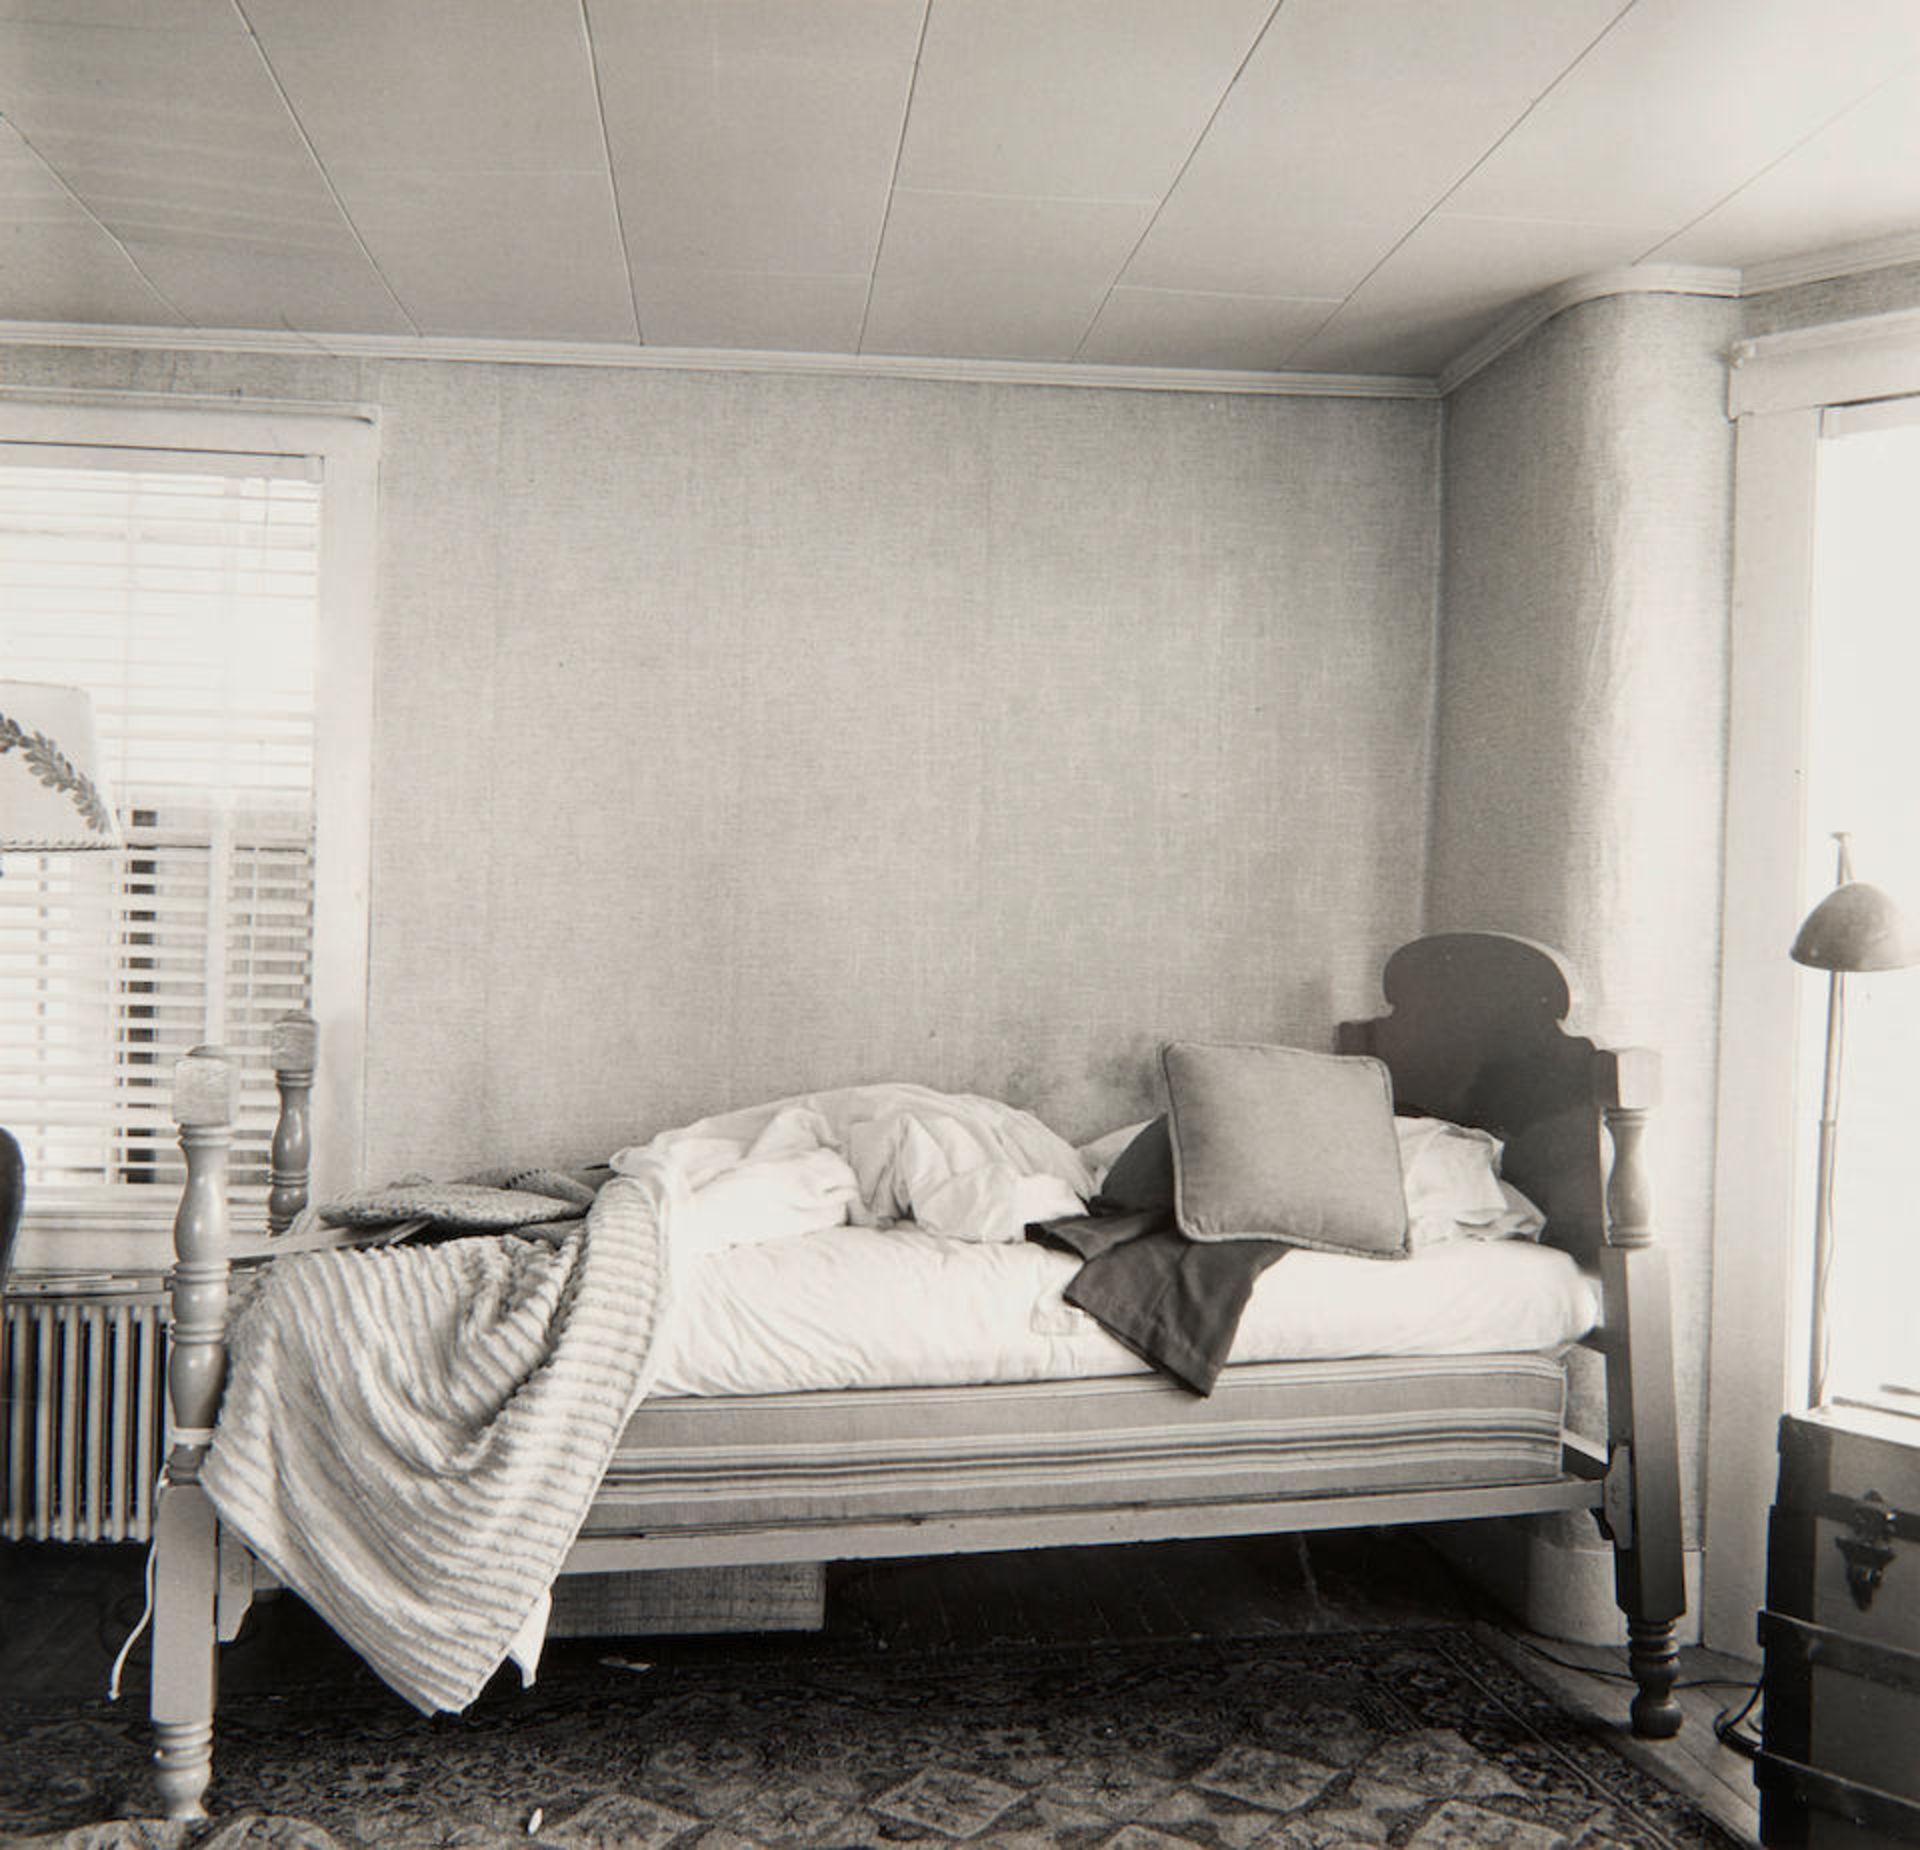 Walker Evans (1903-1975); Three Photographs including: Bedroom Interior, Enfield, New Hampshire;...